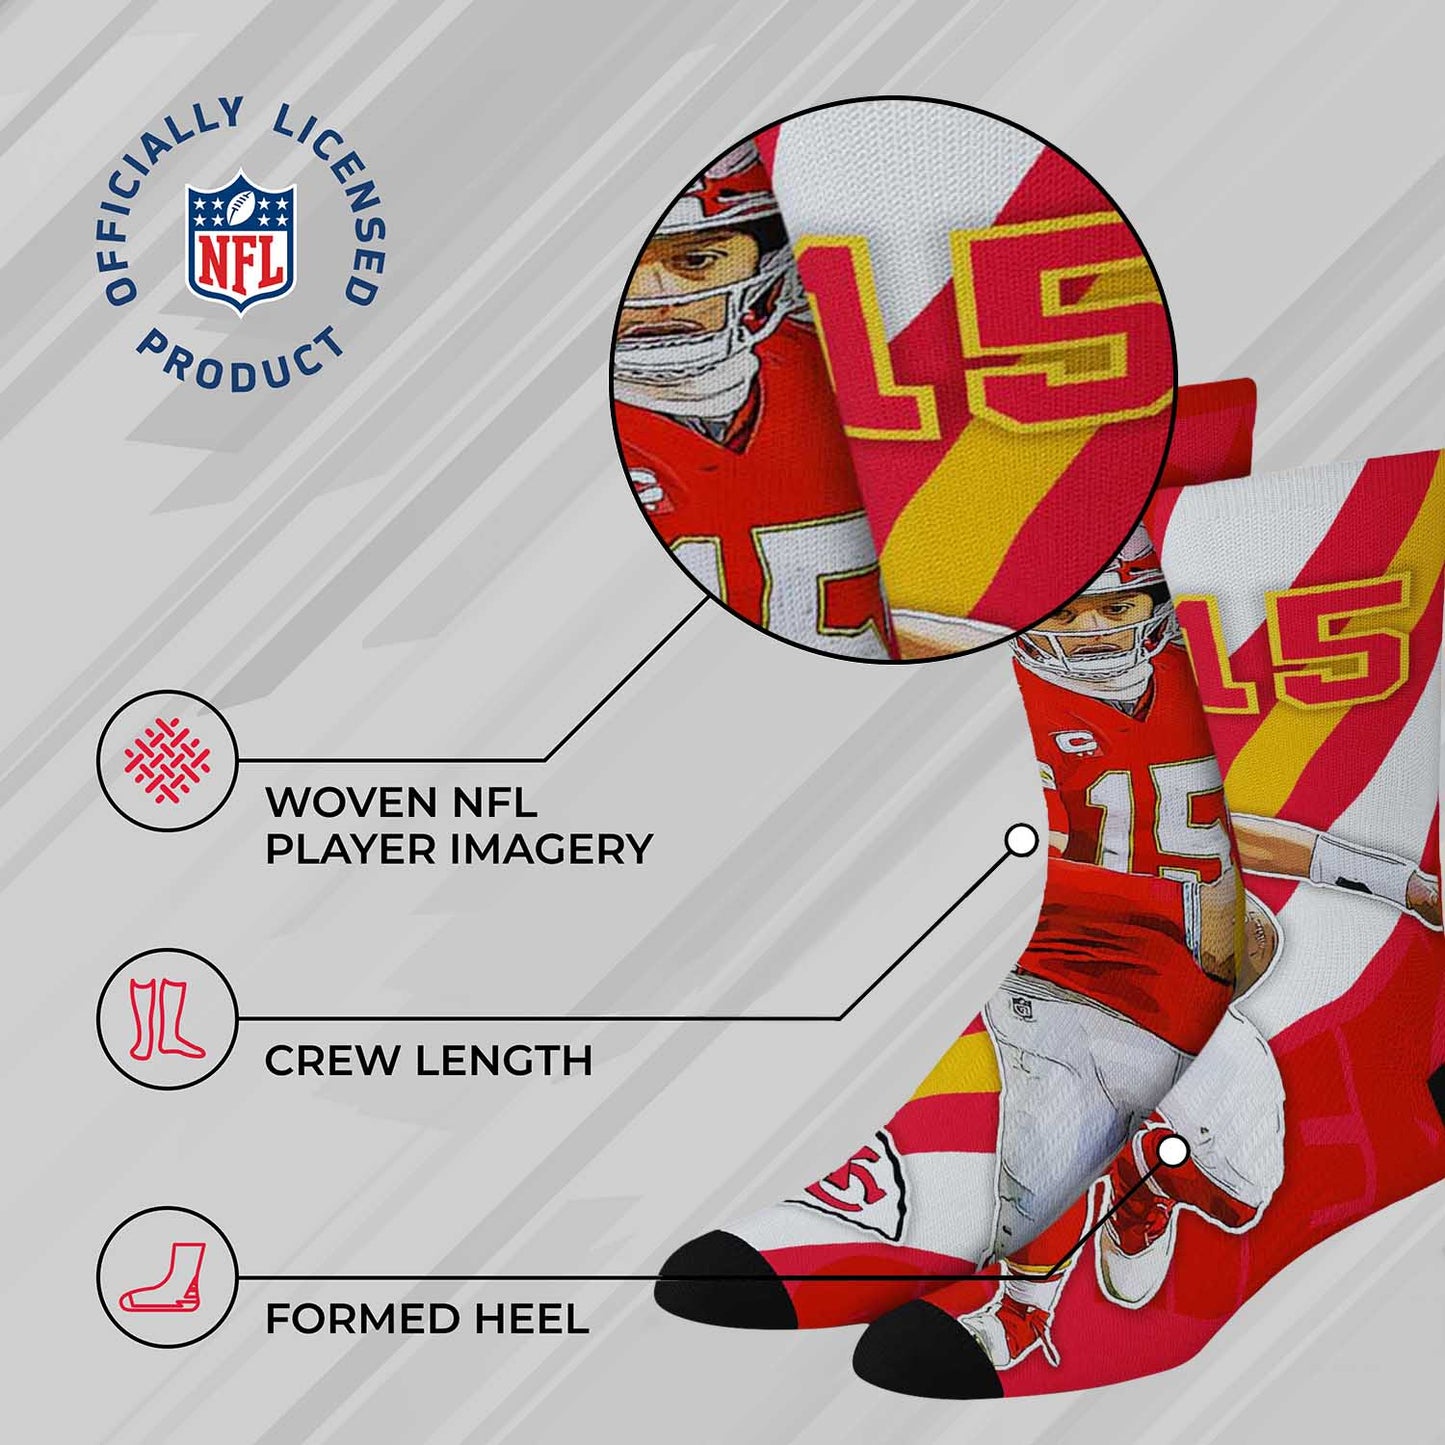 Kansas City Chiefs NFL Adult Player Stripe Sock - Red #15